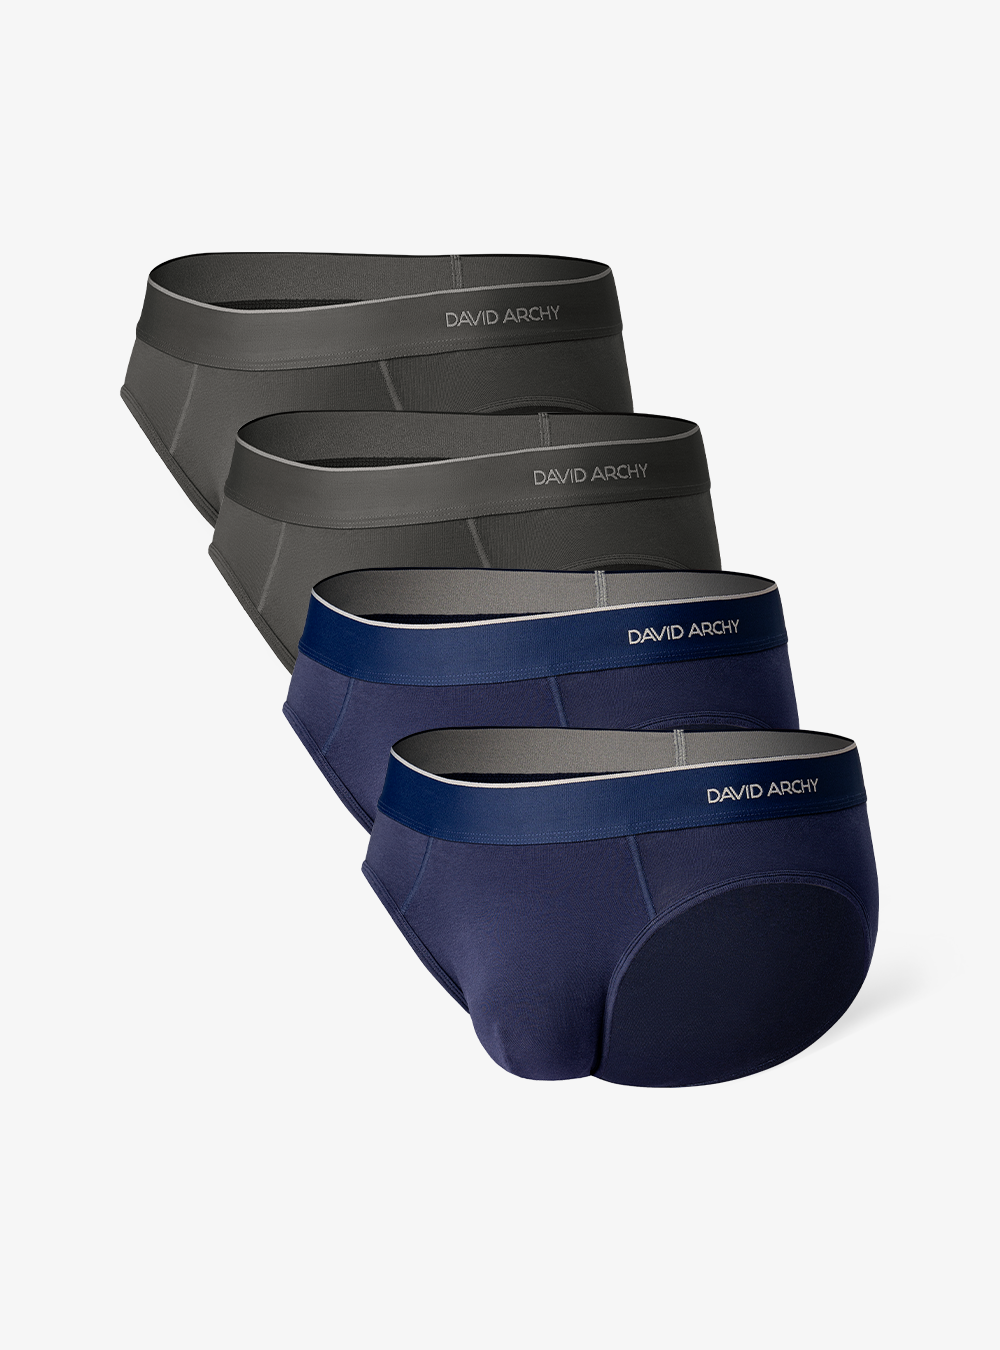 David Archy Underwear DANK08B Men's Rayon Breathable Ultra Soft Comfort  Lightweight Pouch Briefs 